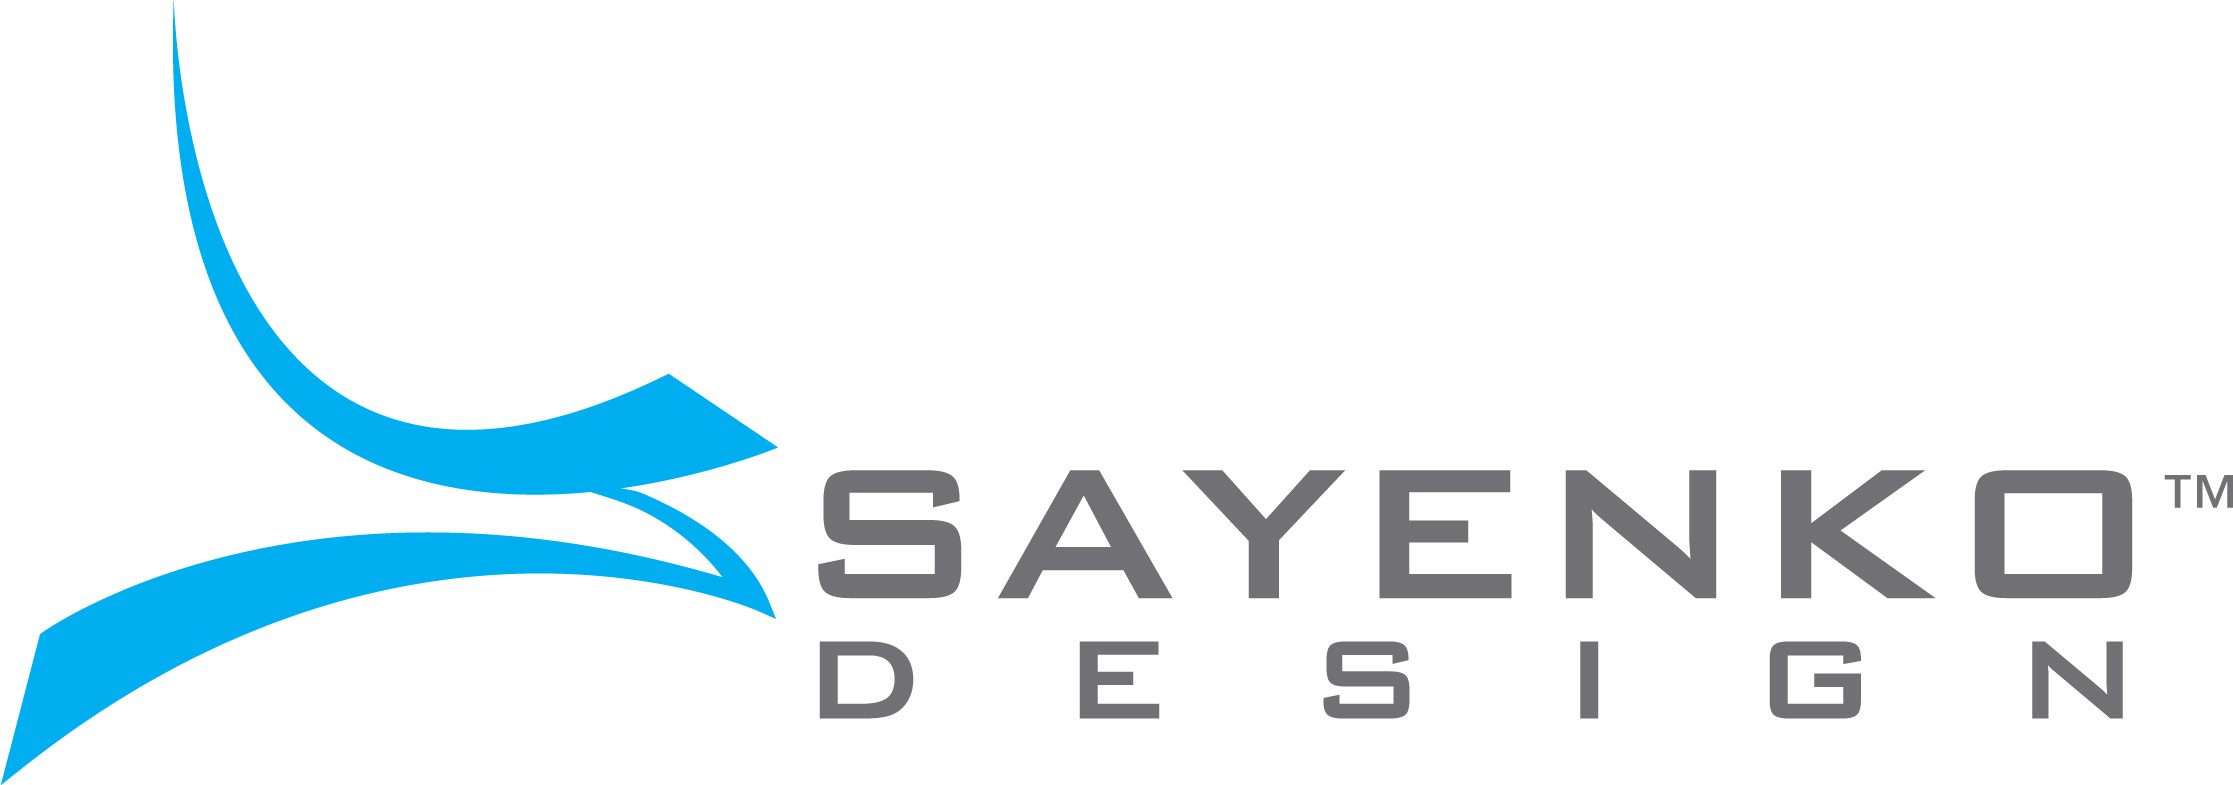 Top Seattle Web Design Firm Logo: Sayenko Design